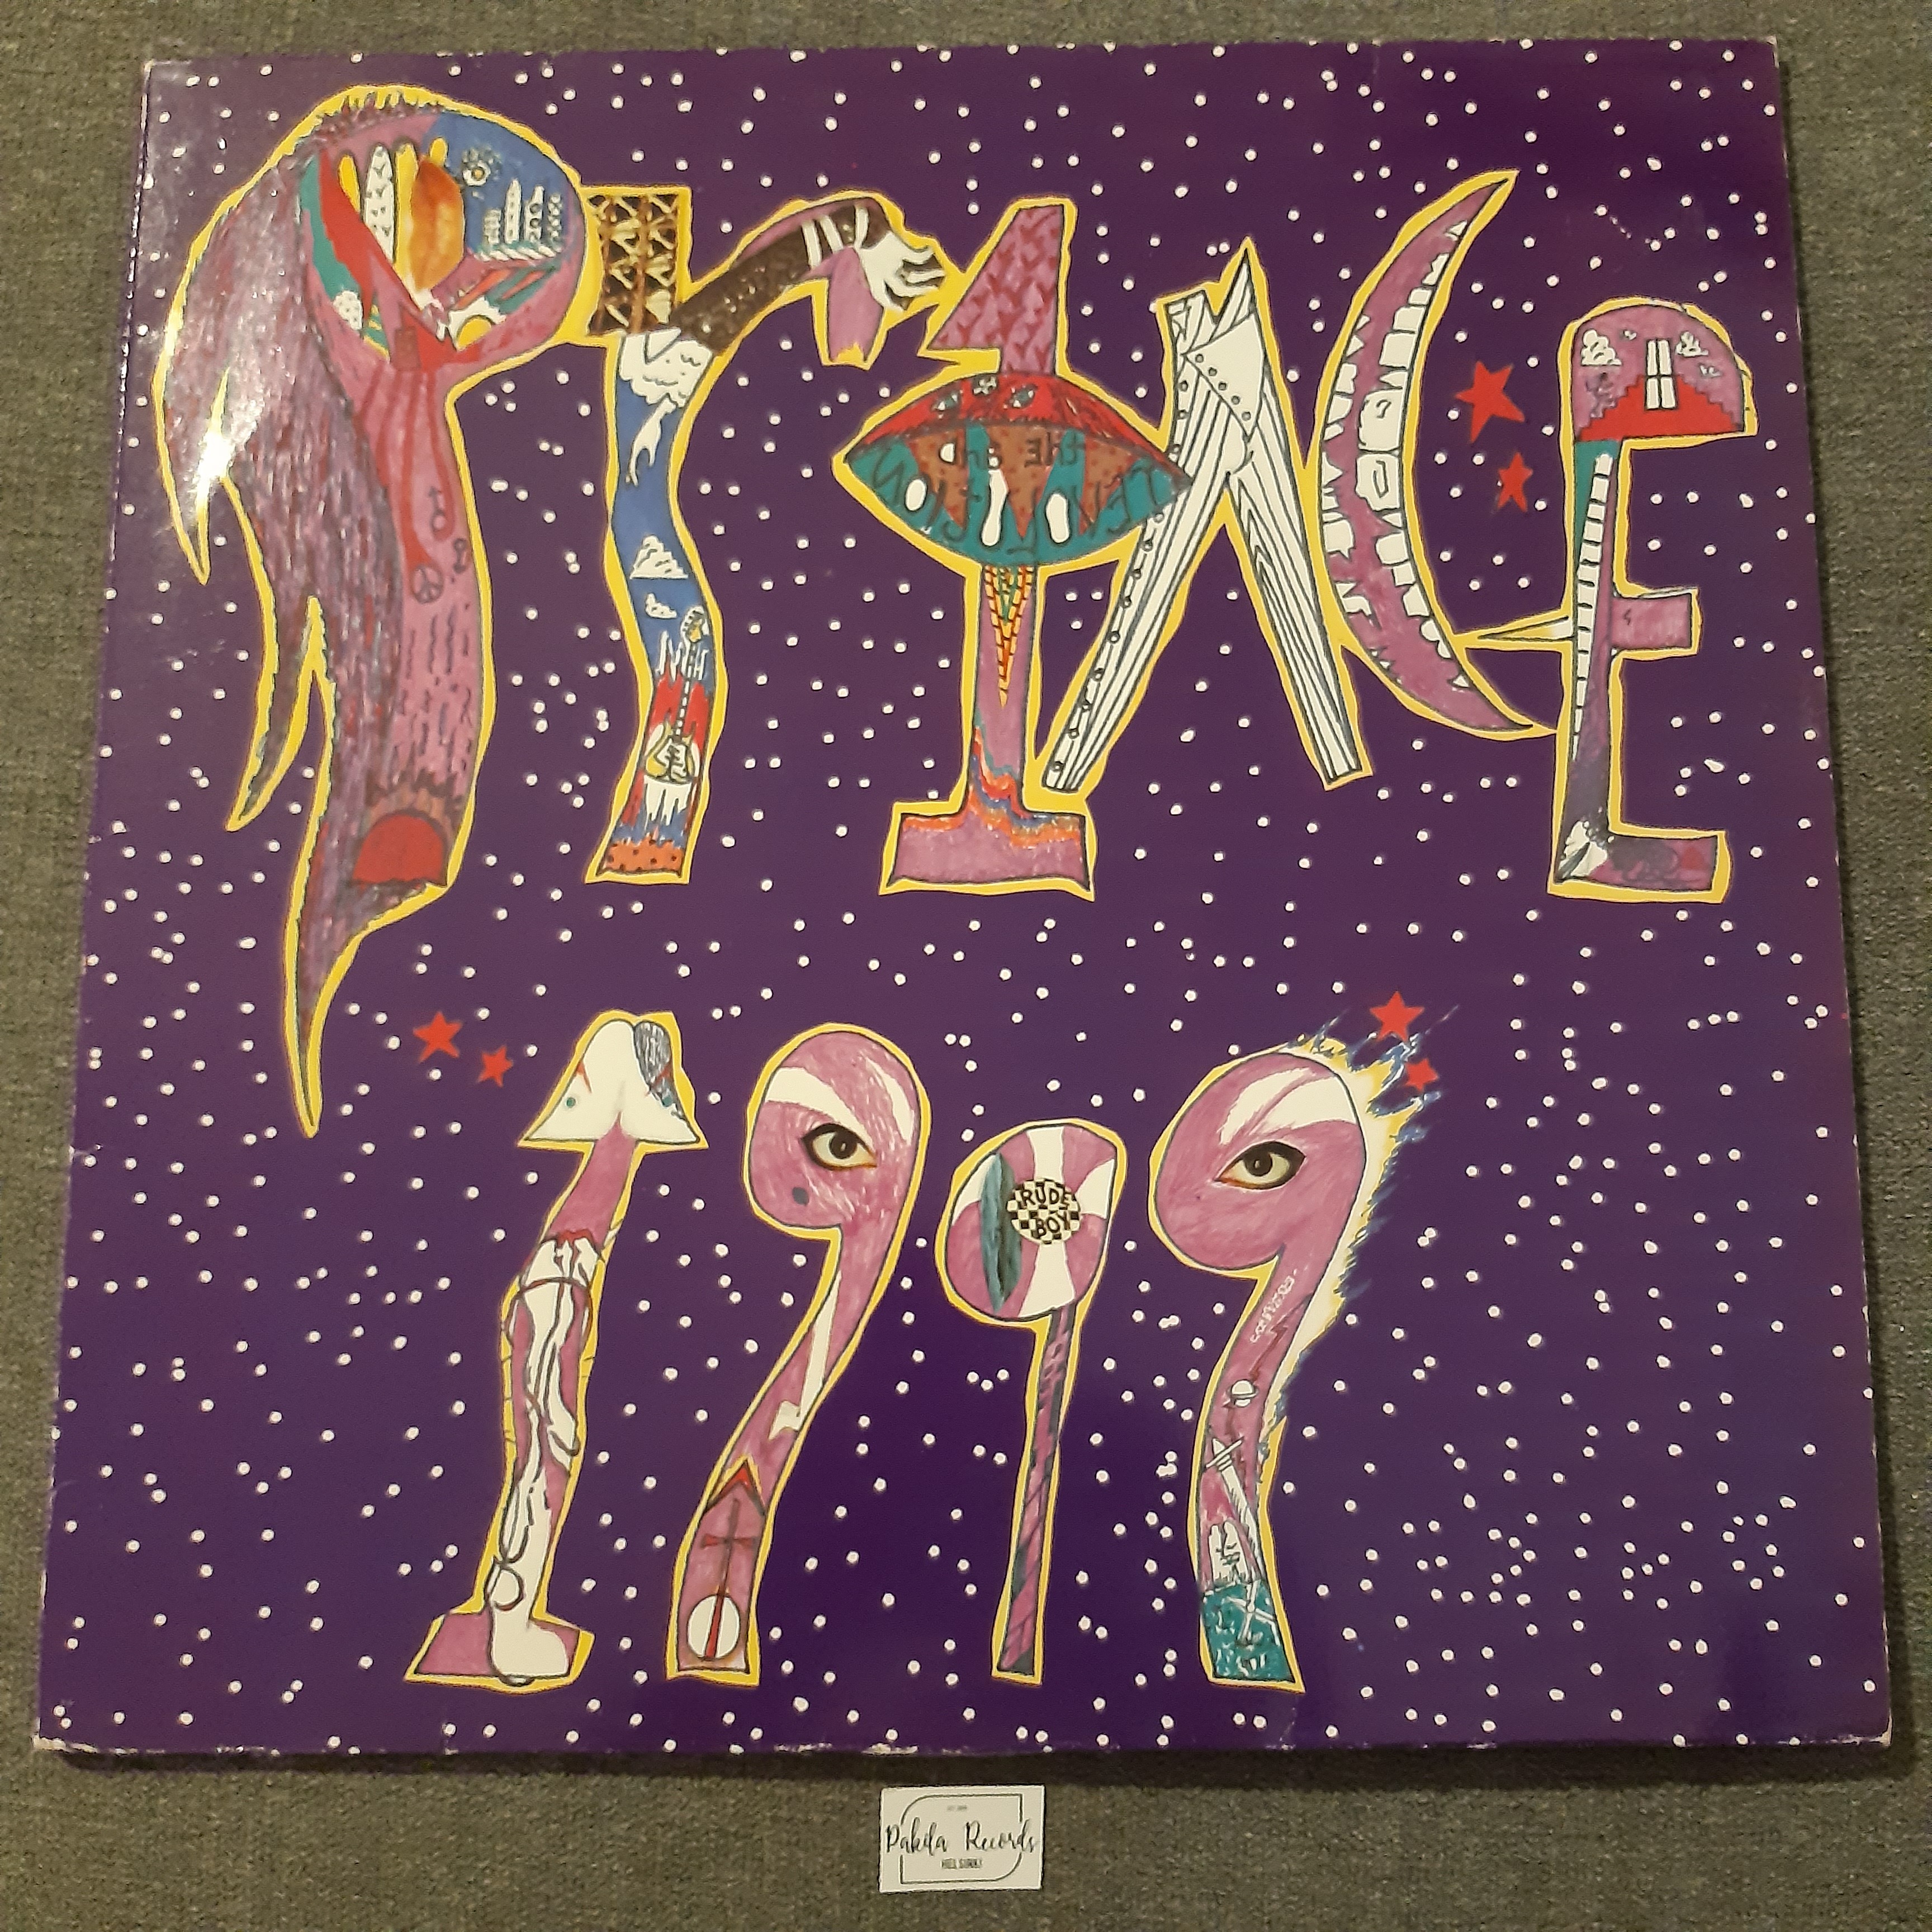 Prince - 1999 - 2 LP (käytetty)